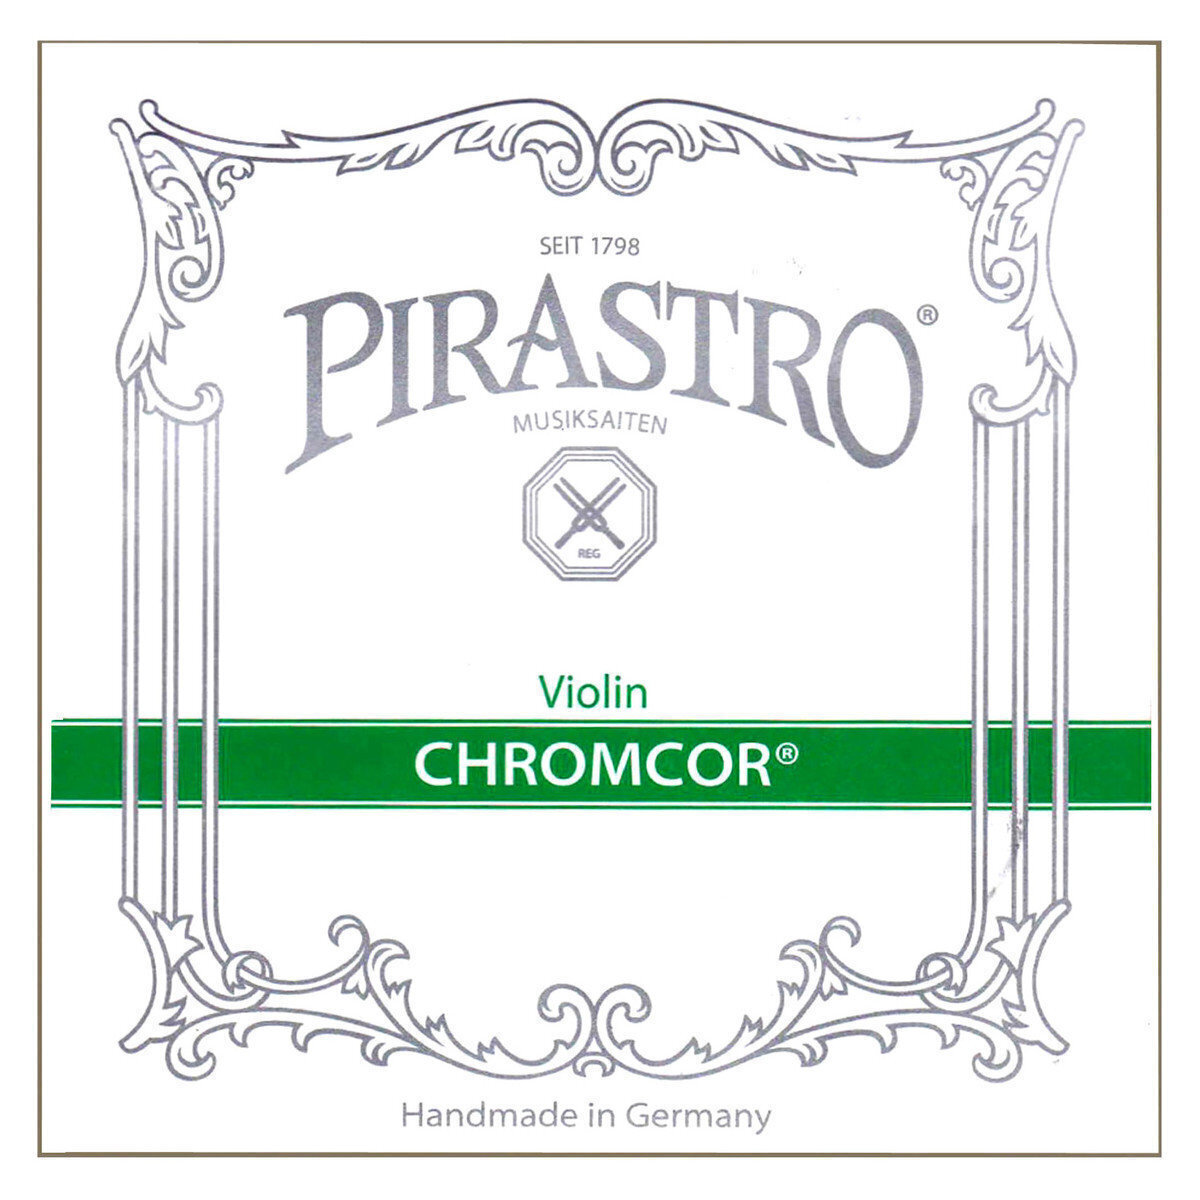 Struny do skrzypiec Pirastro Pirastro Chromcor violin E, ball, chrome steel